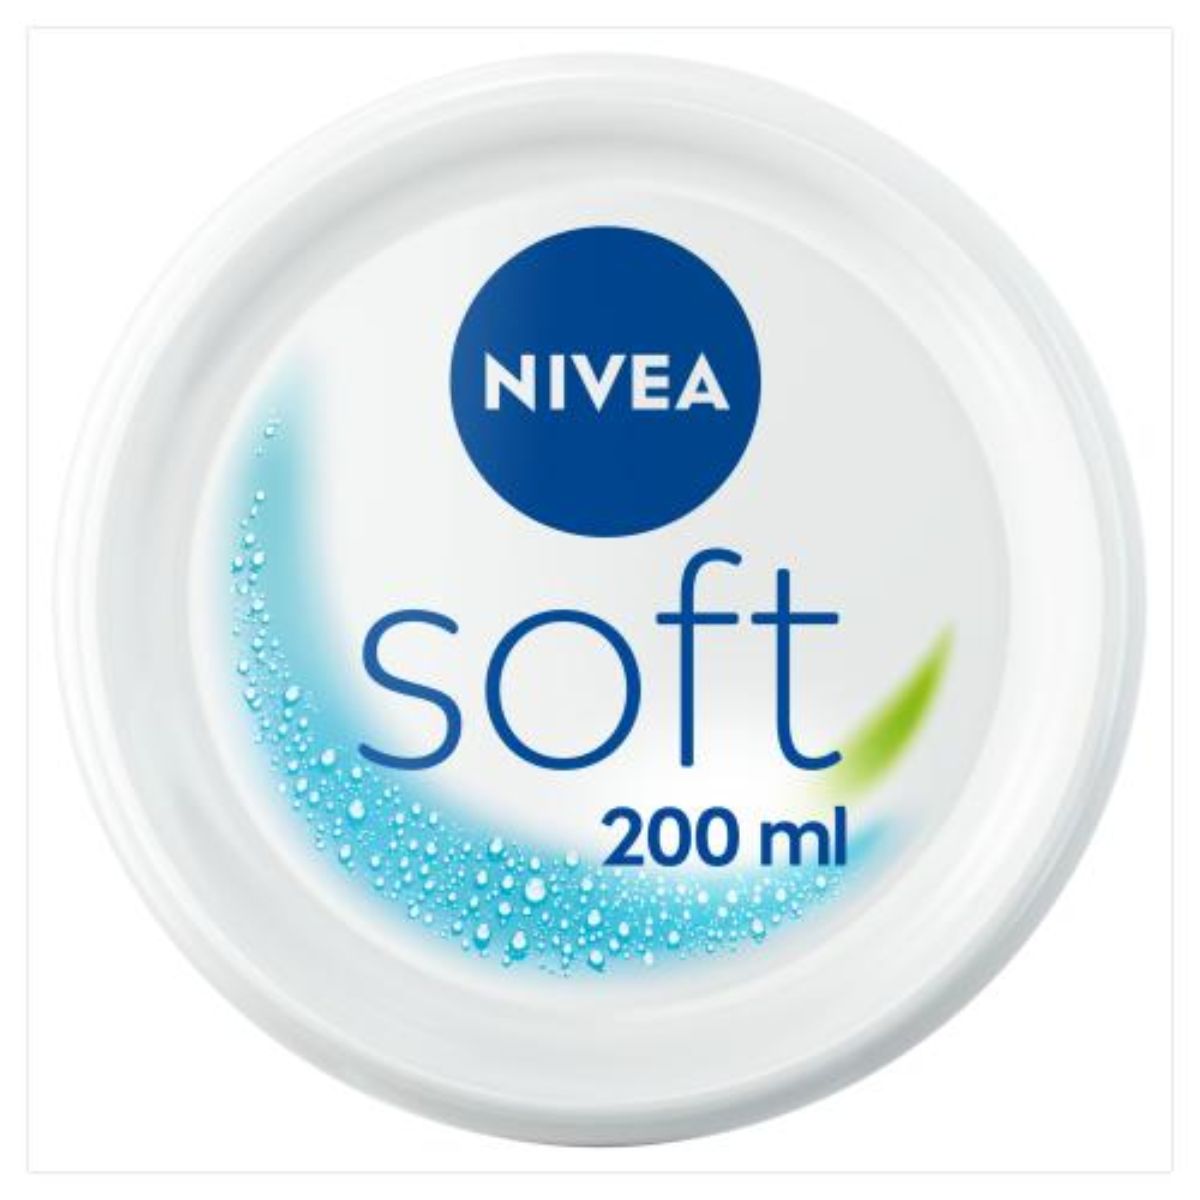 Nivea - Soft Moisturiser for Body Face & Hands Cream - 200ml.